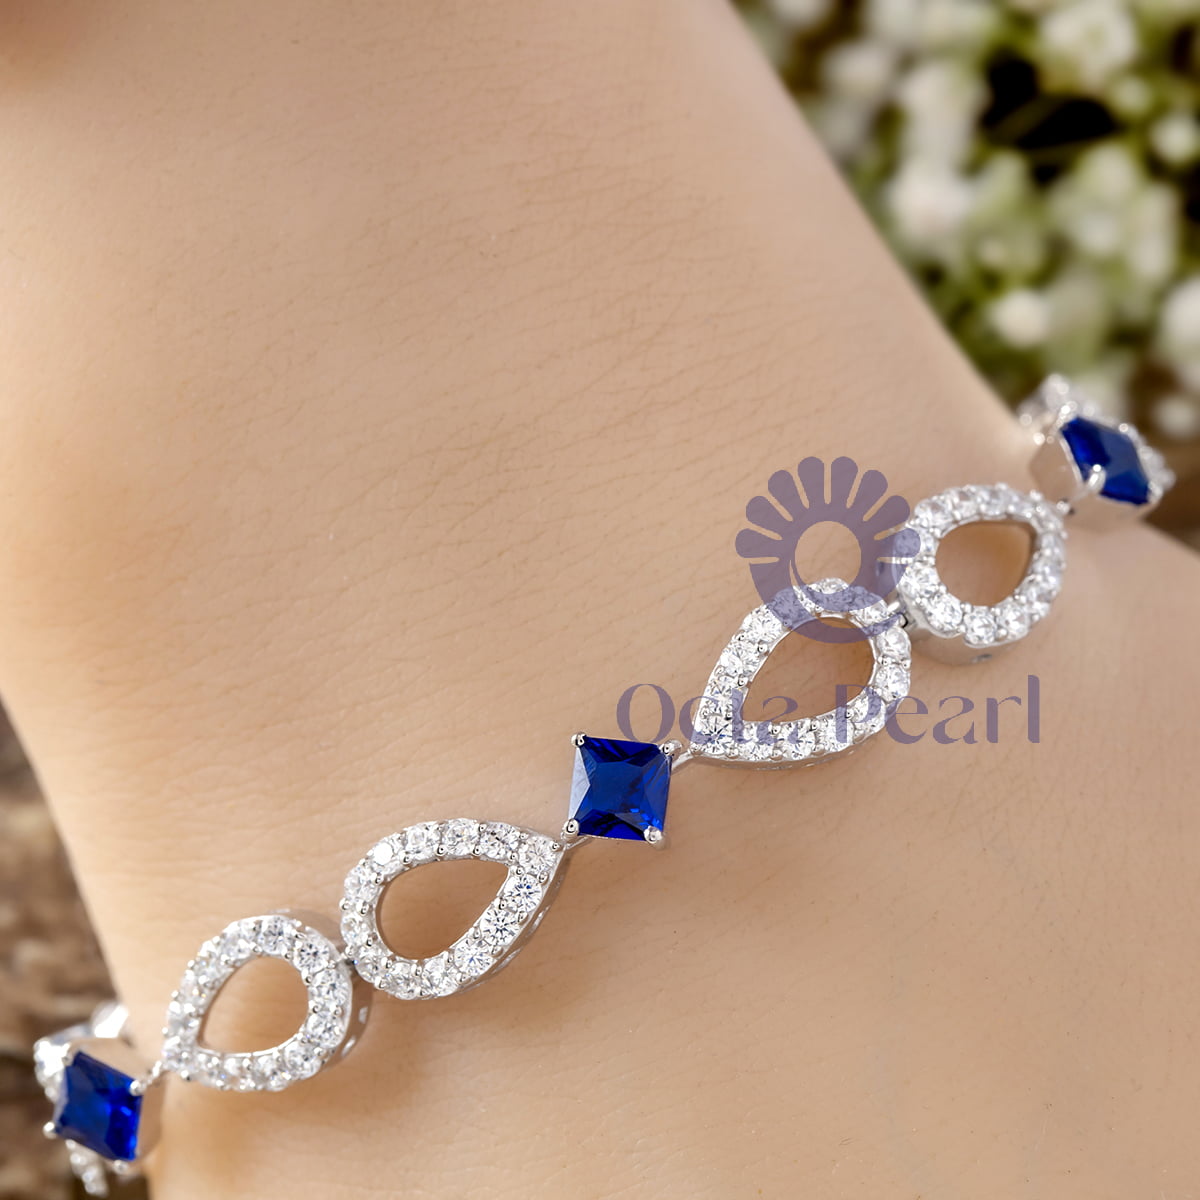 Blue Sapphire With Round White CZ Stone Teardrop Style Tennis Bracelet For ladies